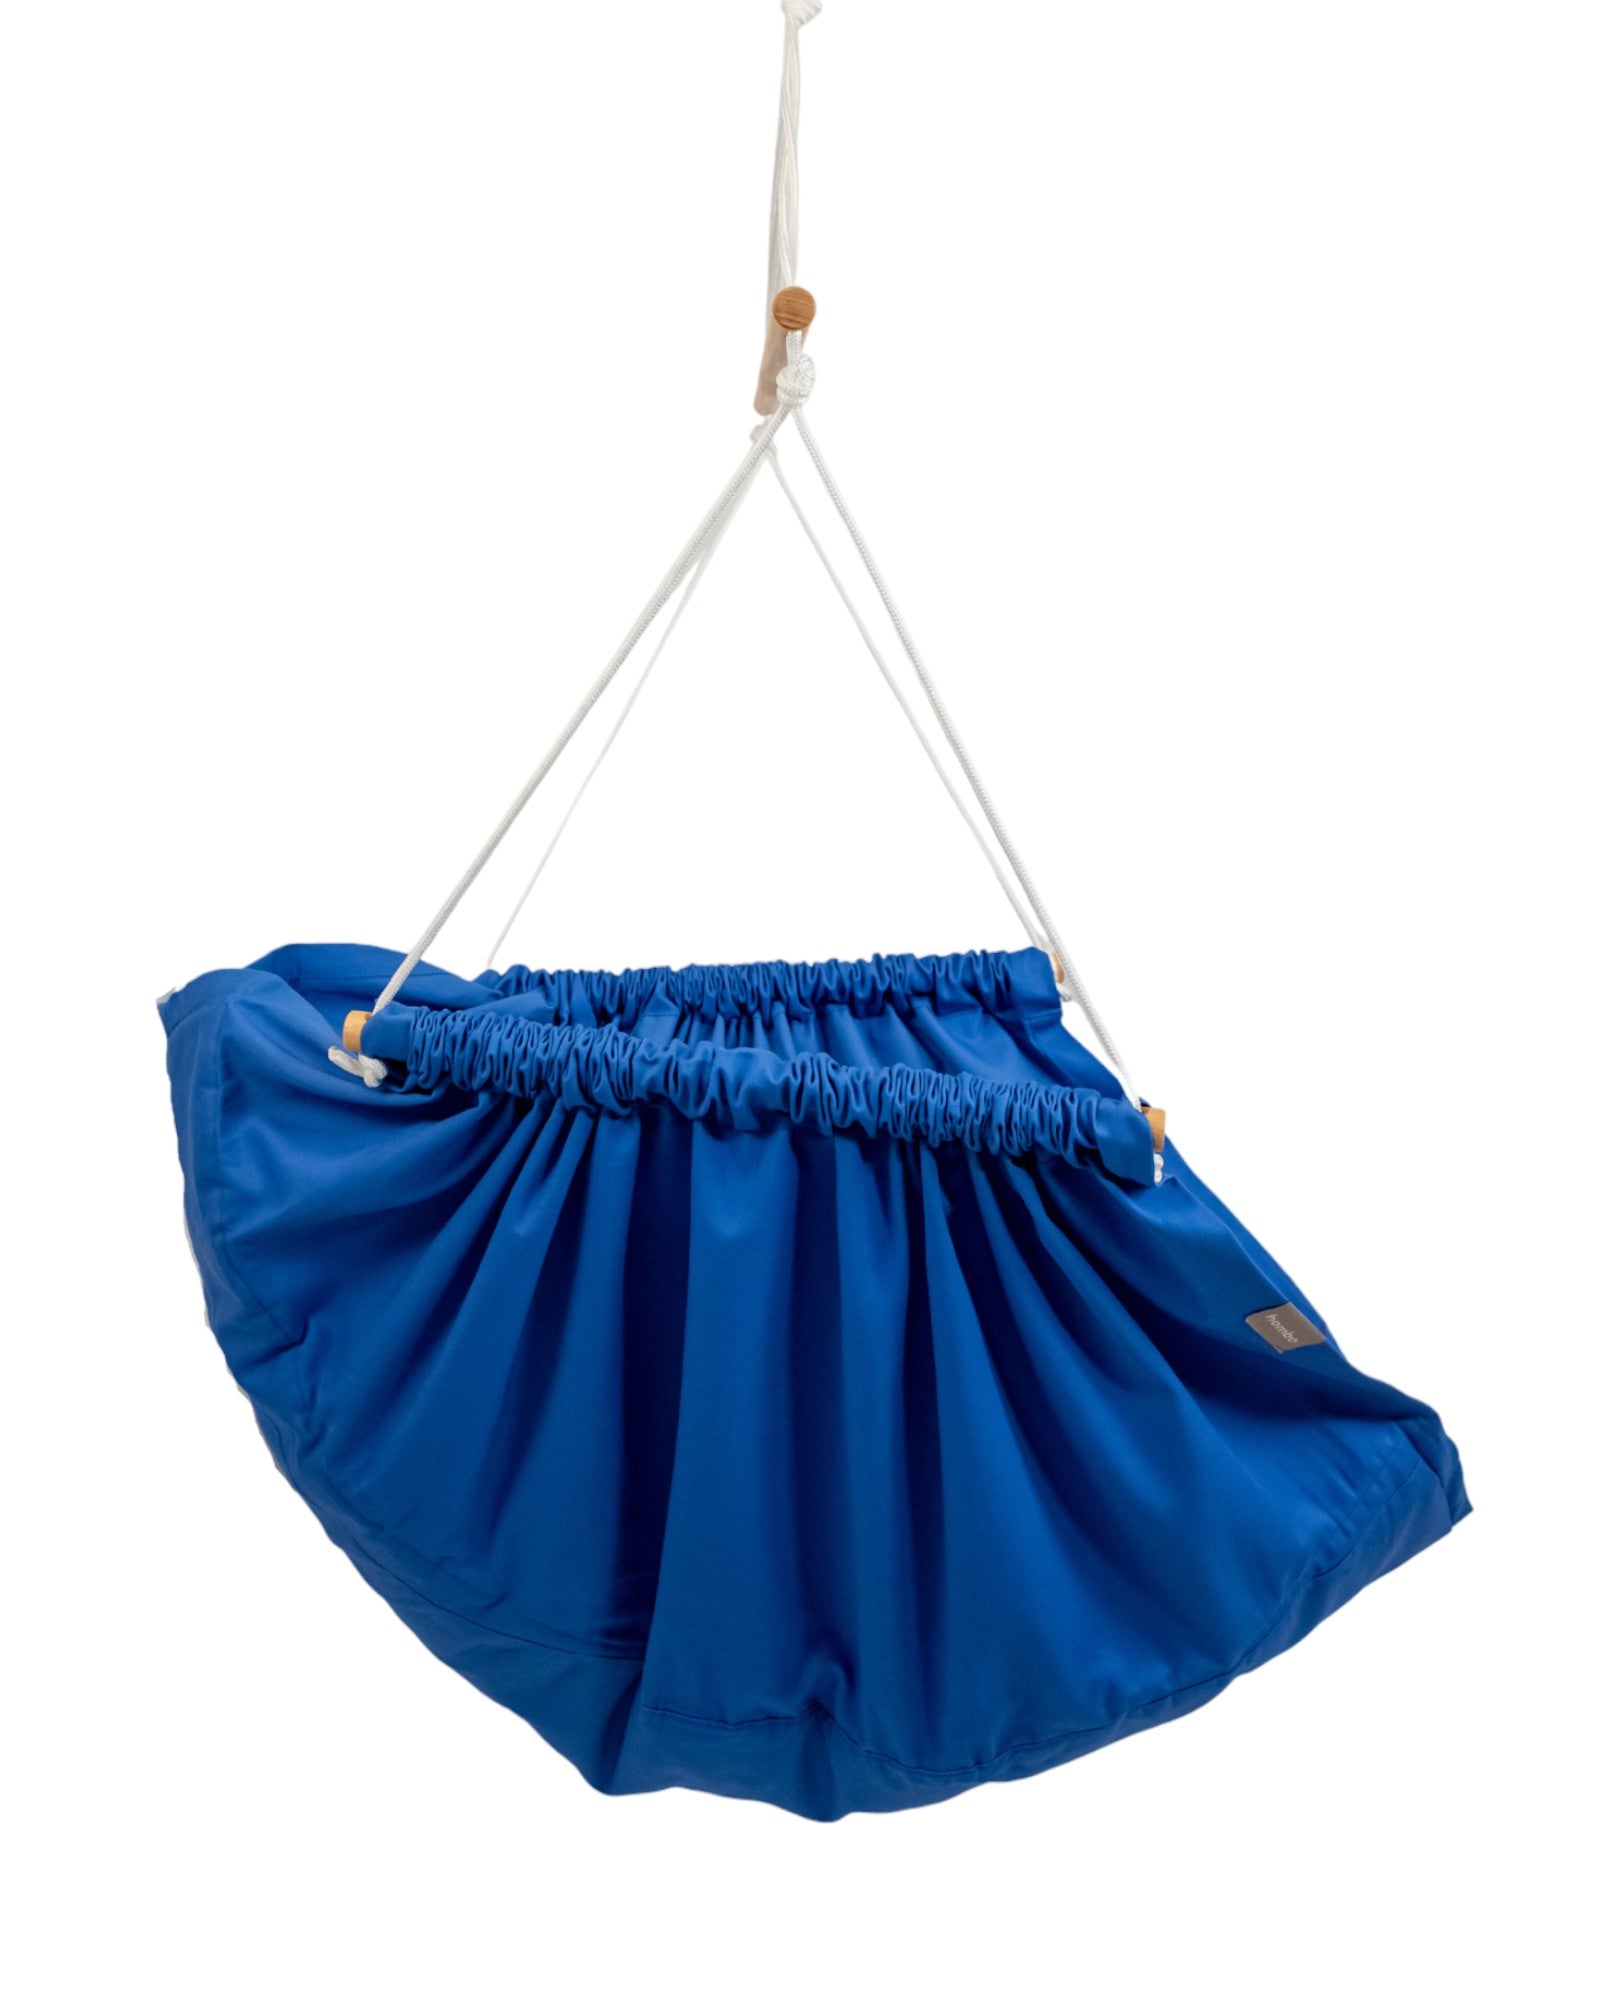 homba® zen hanging chair cotton blue